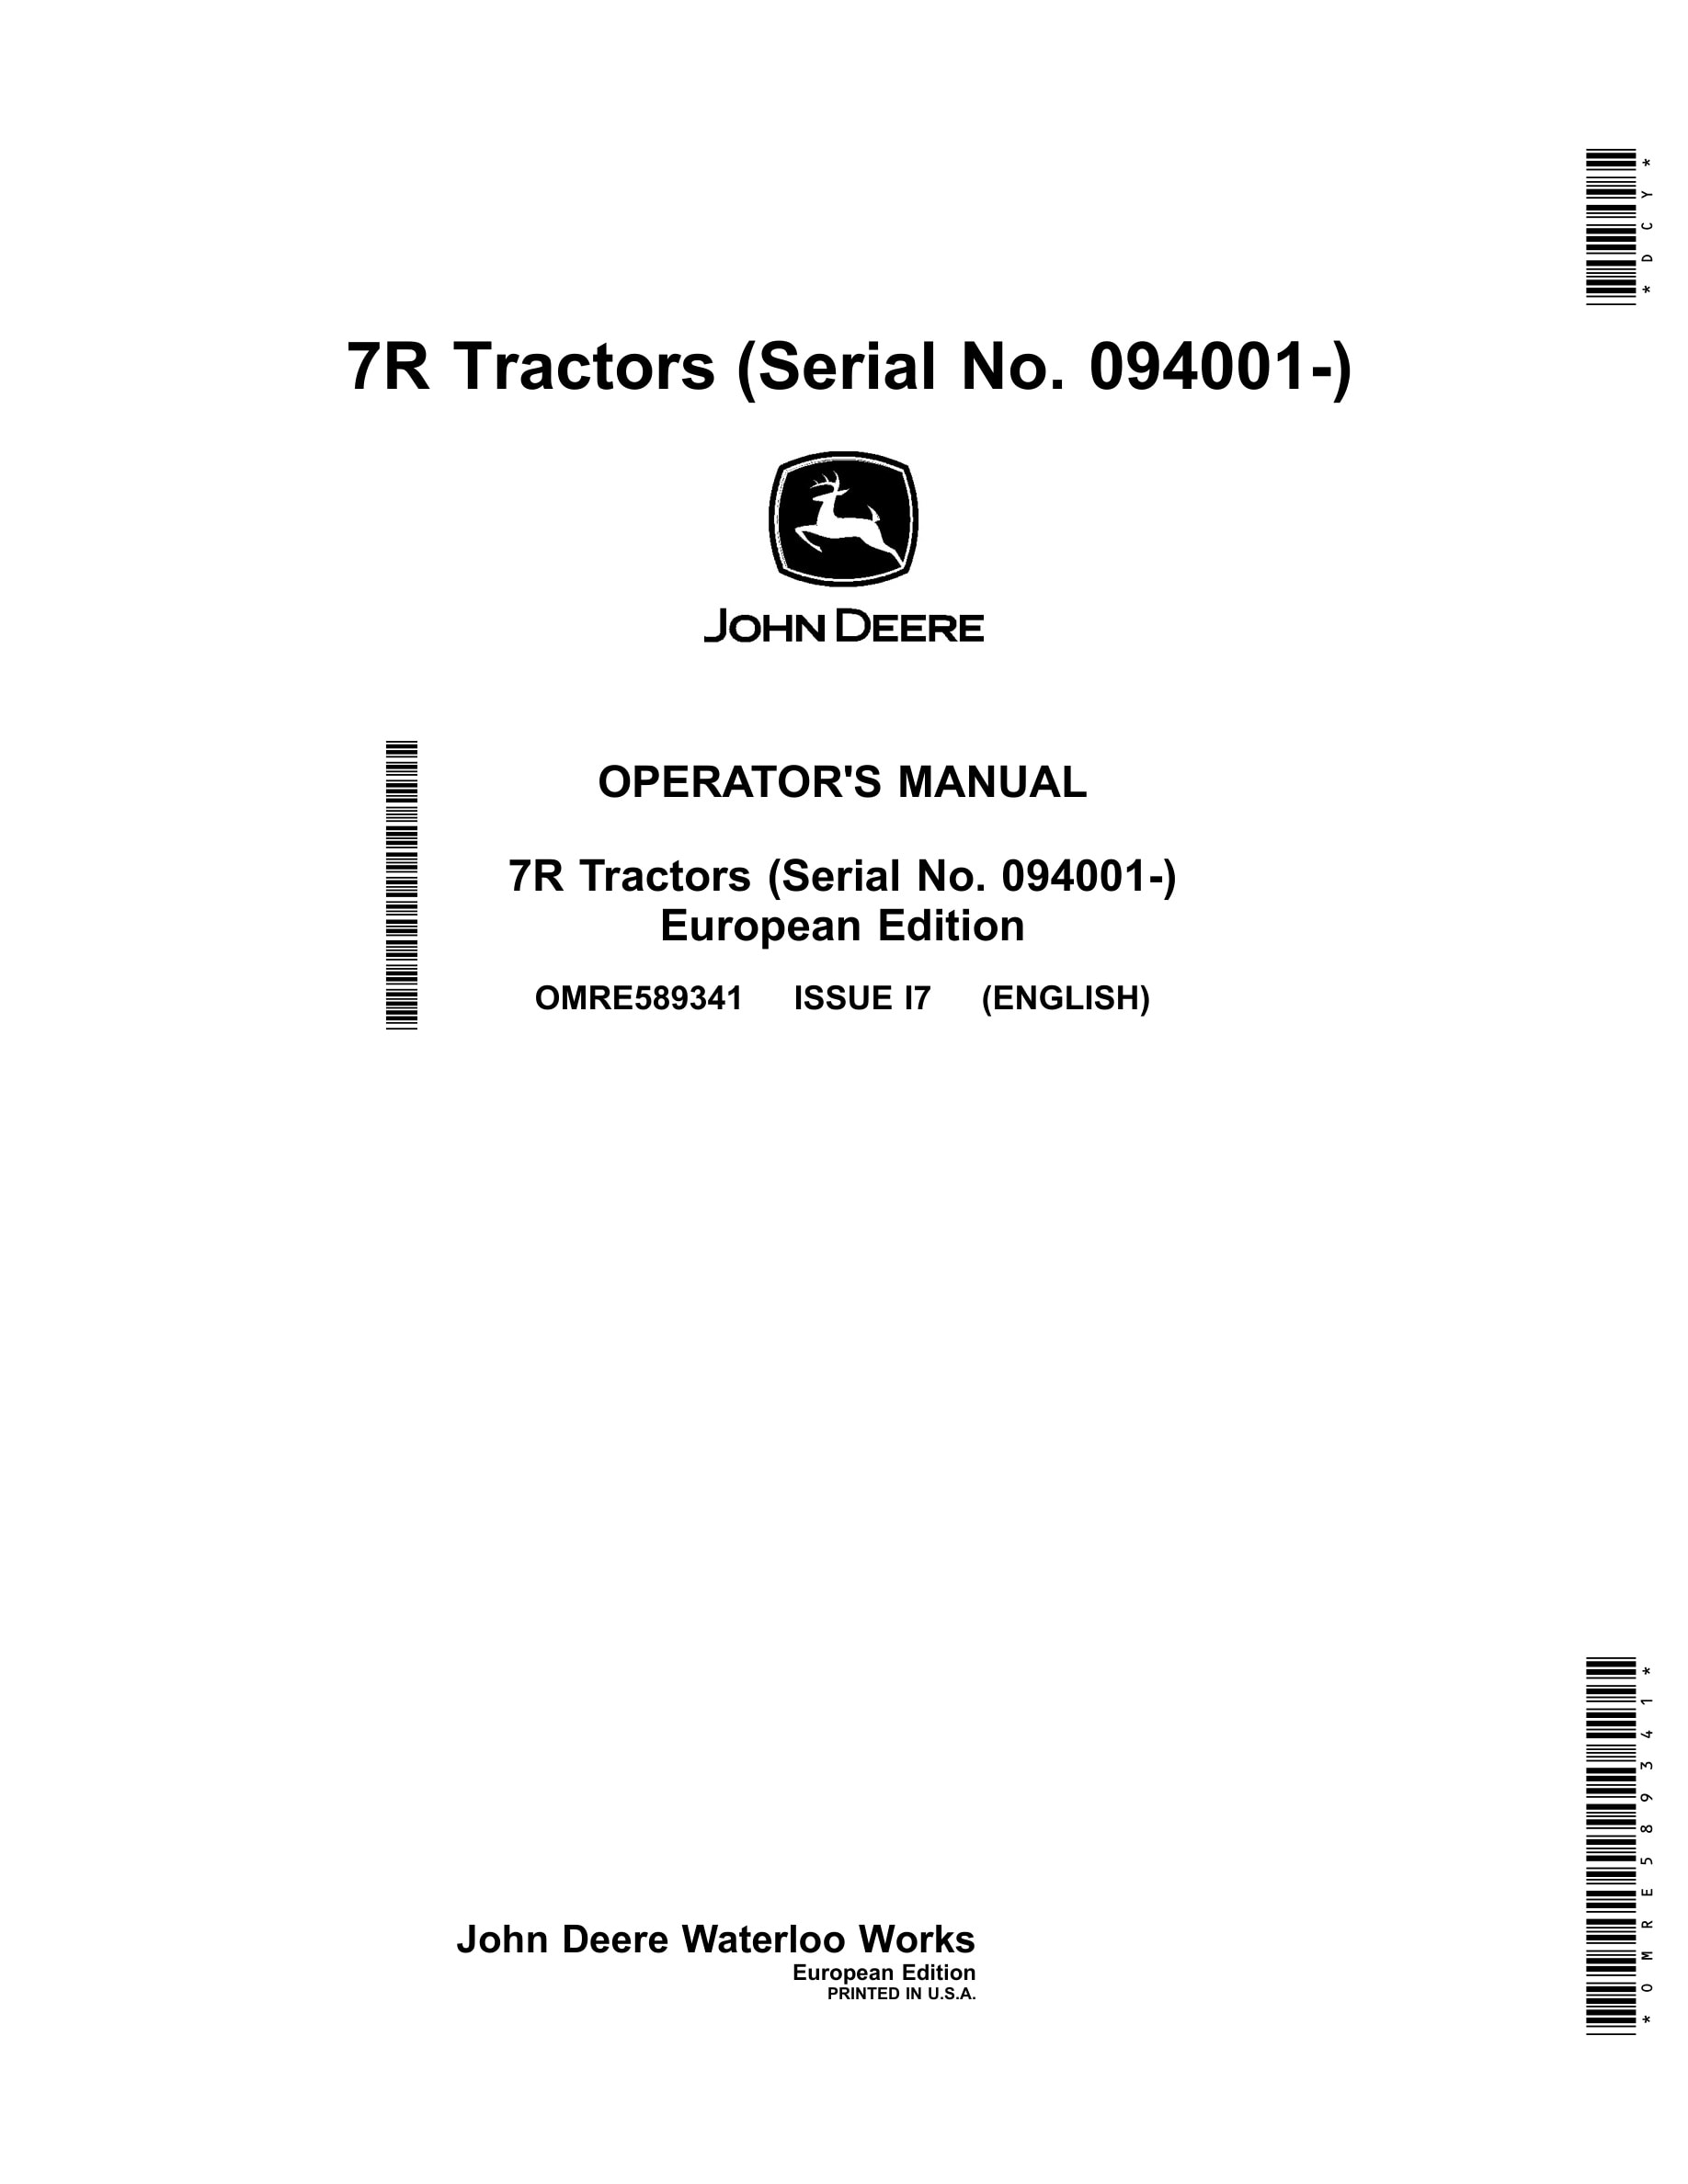 John Deere 7r Tractors Operator Manuals OMRE589341-1